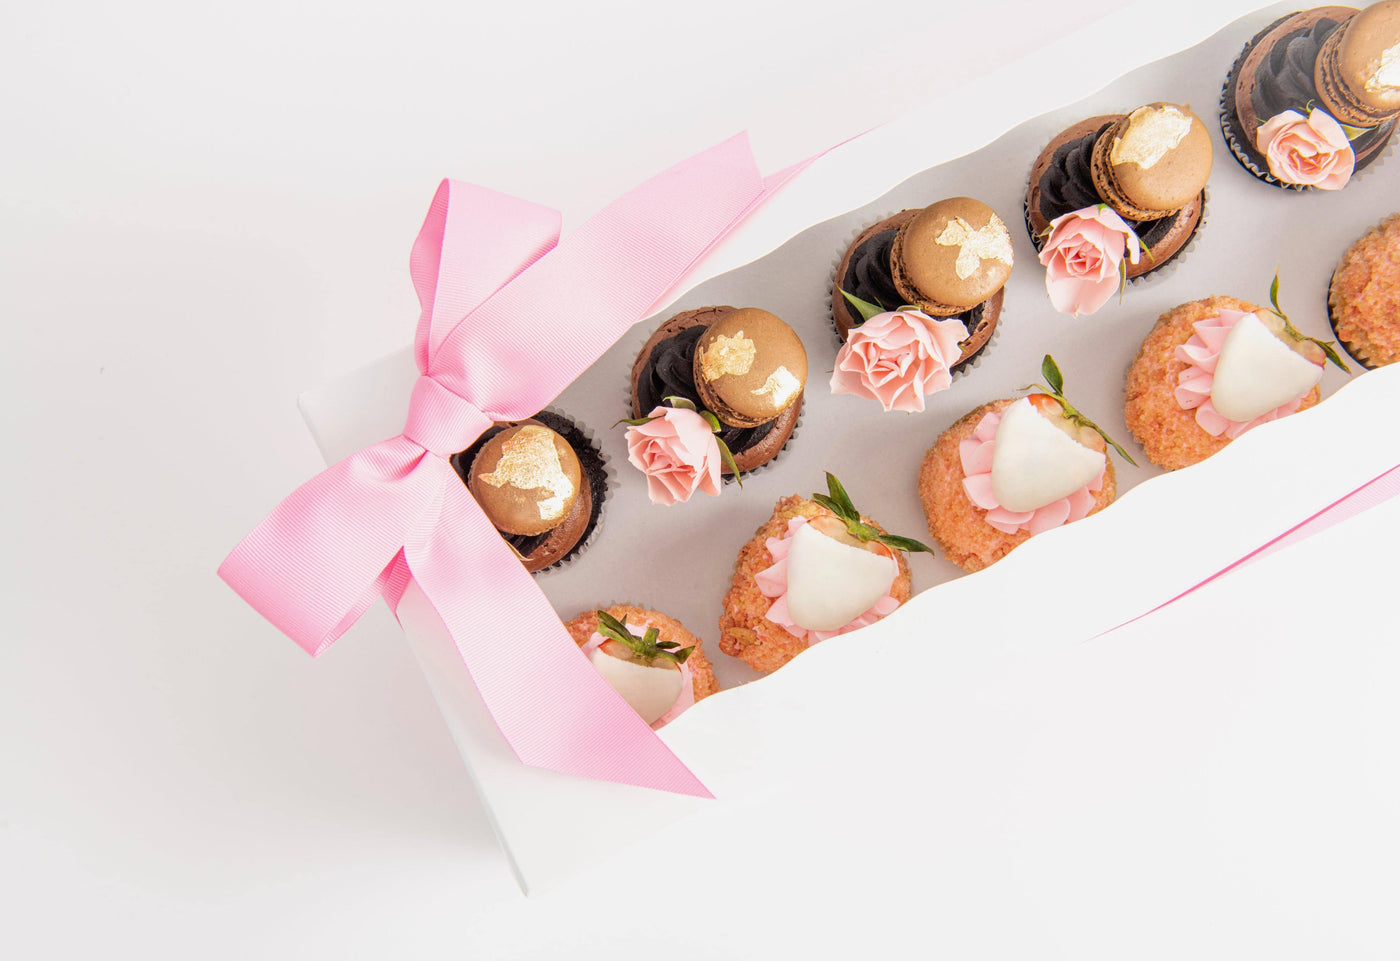 Bel Amour Cupcakes - Sweet E's Bake Shop